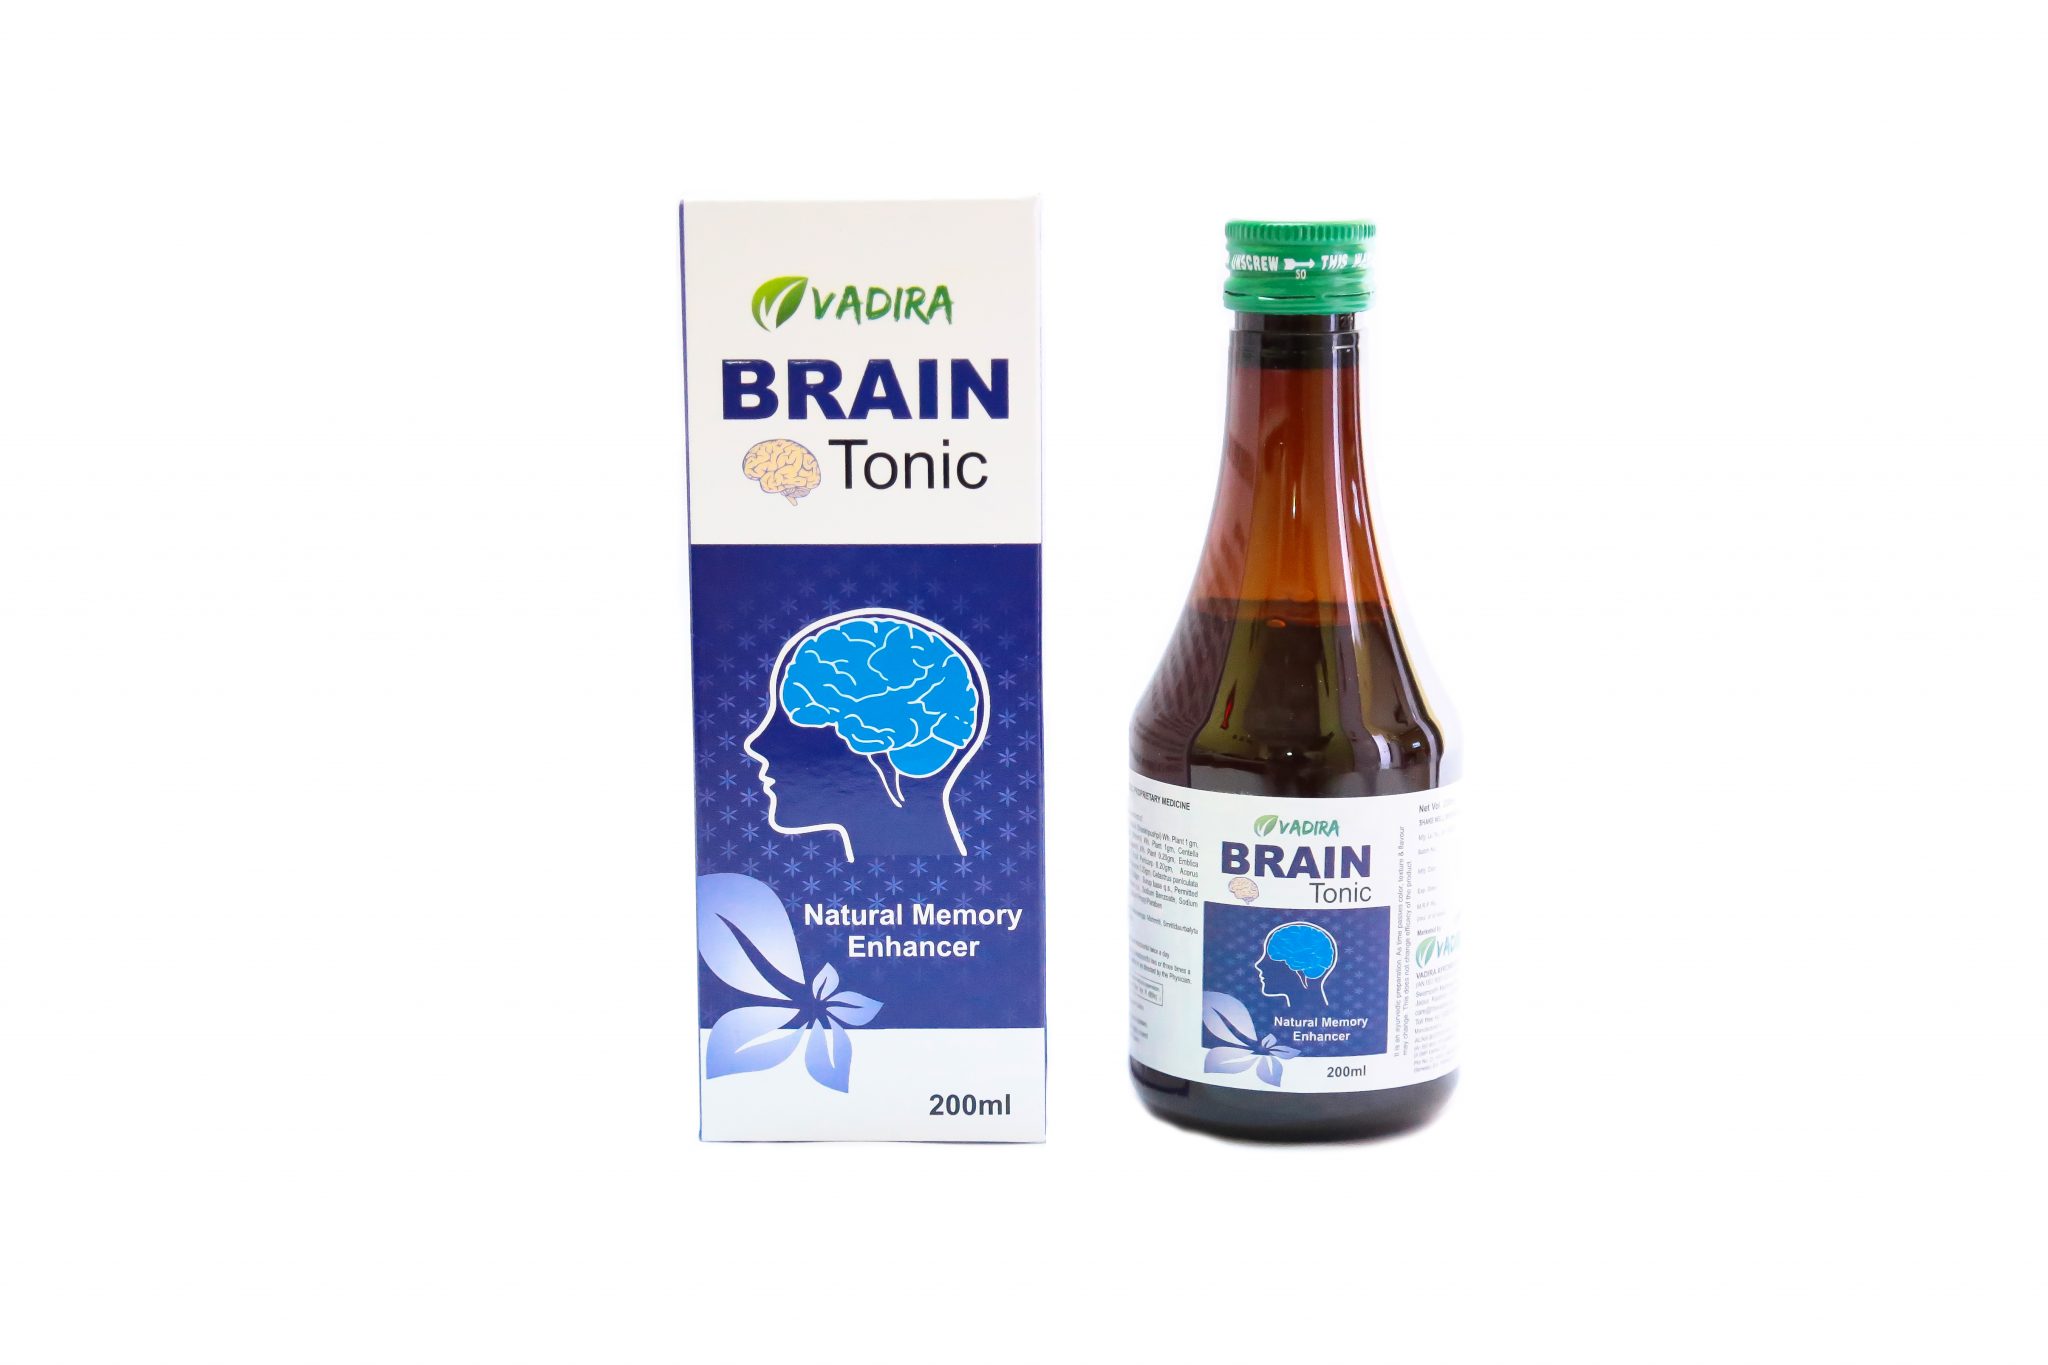 Buy Vadira Brain Tonic at Best Price Online